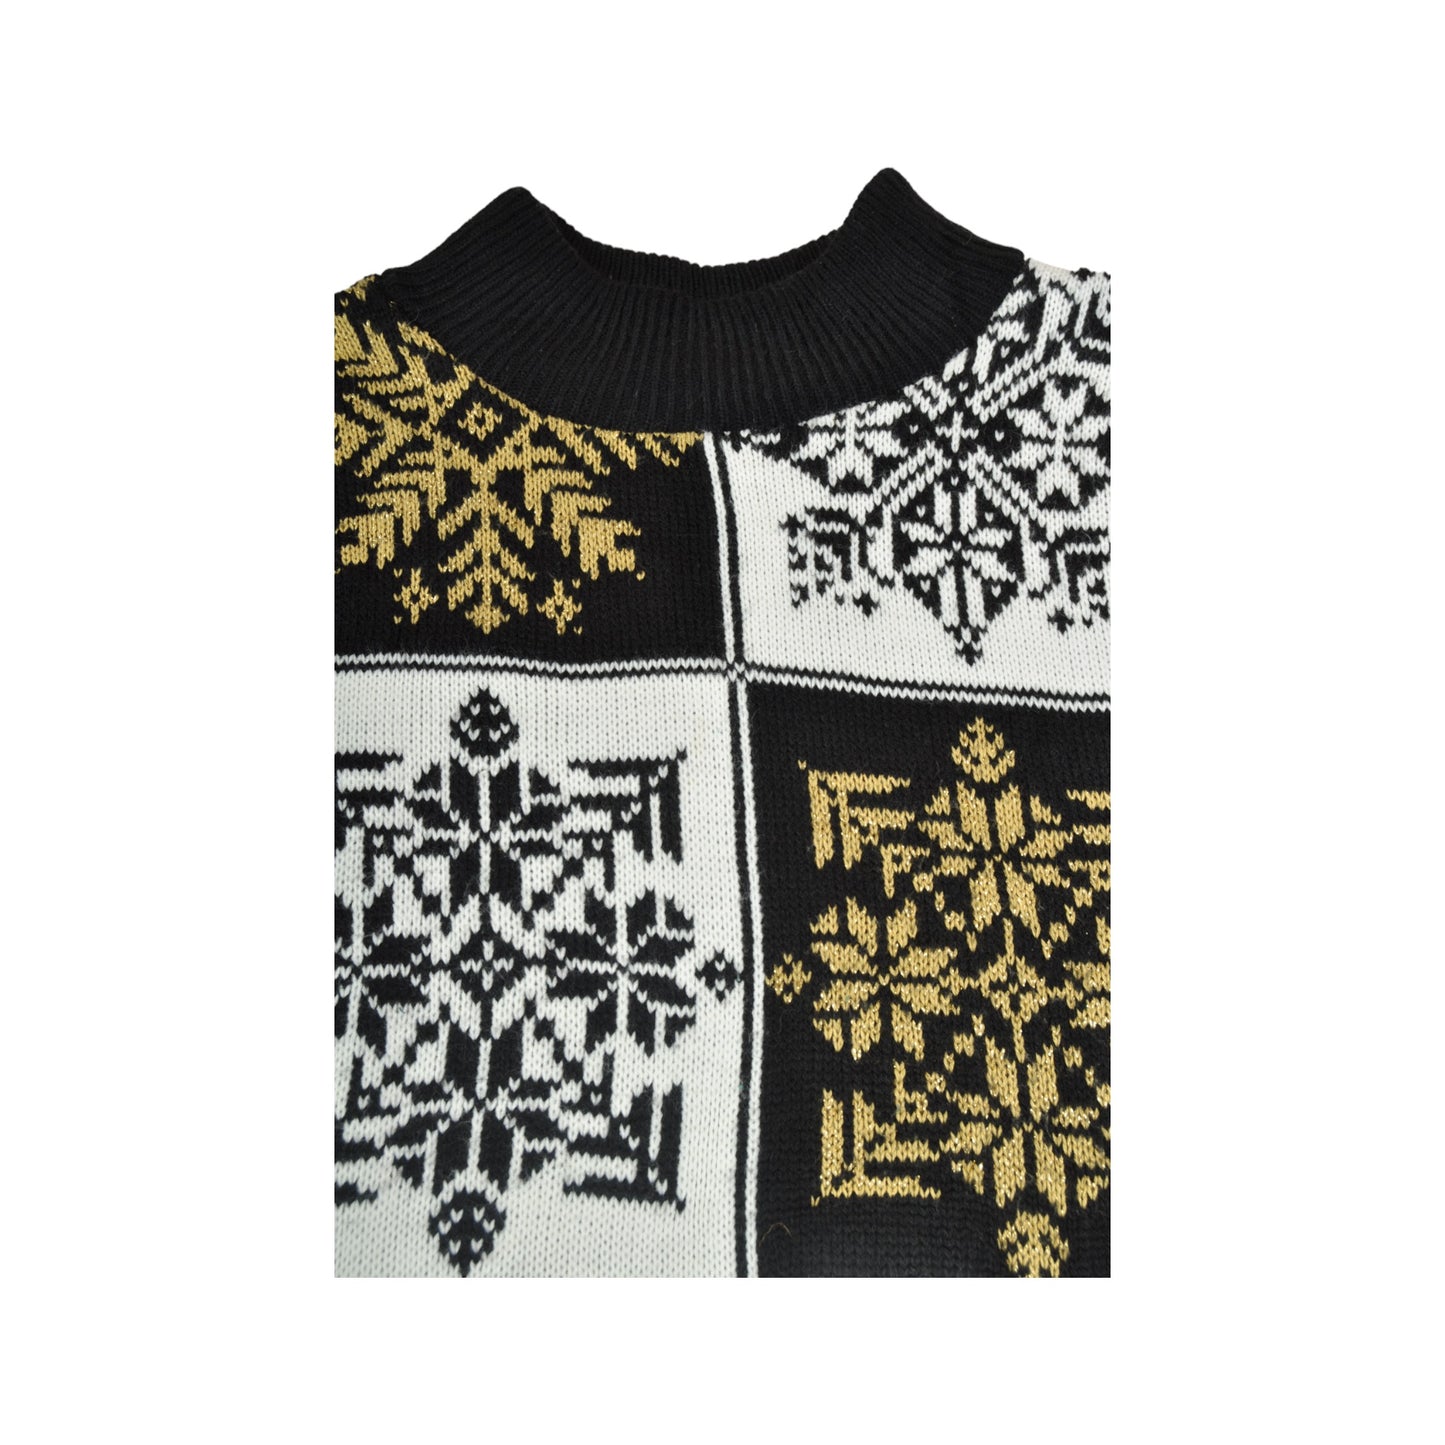 Vintage Knitted Jumper Retro Snowflakes Pattern White/Black Ladies Medium